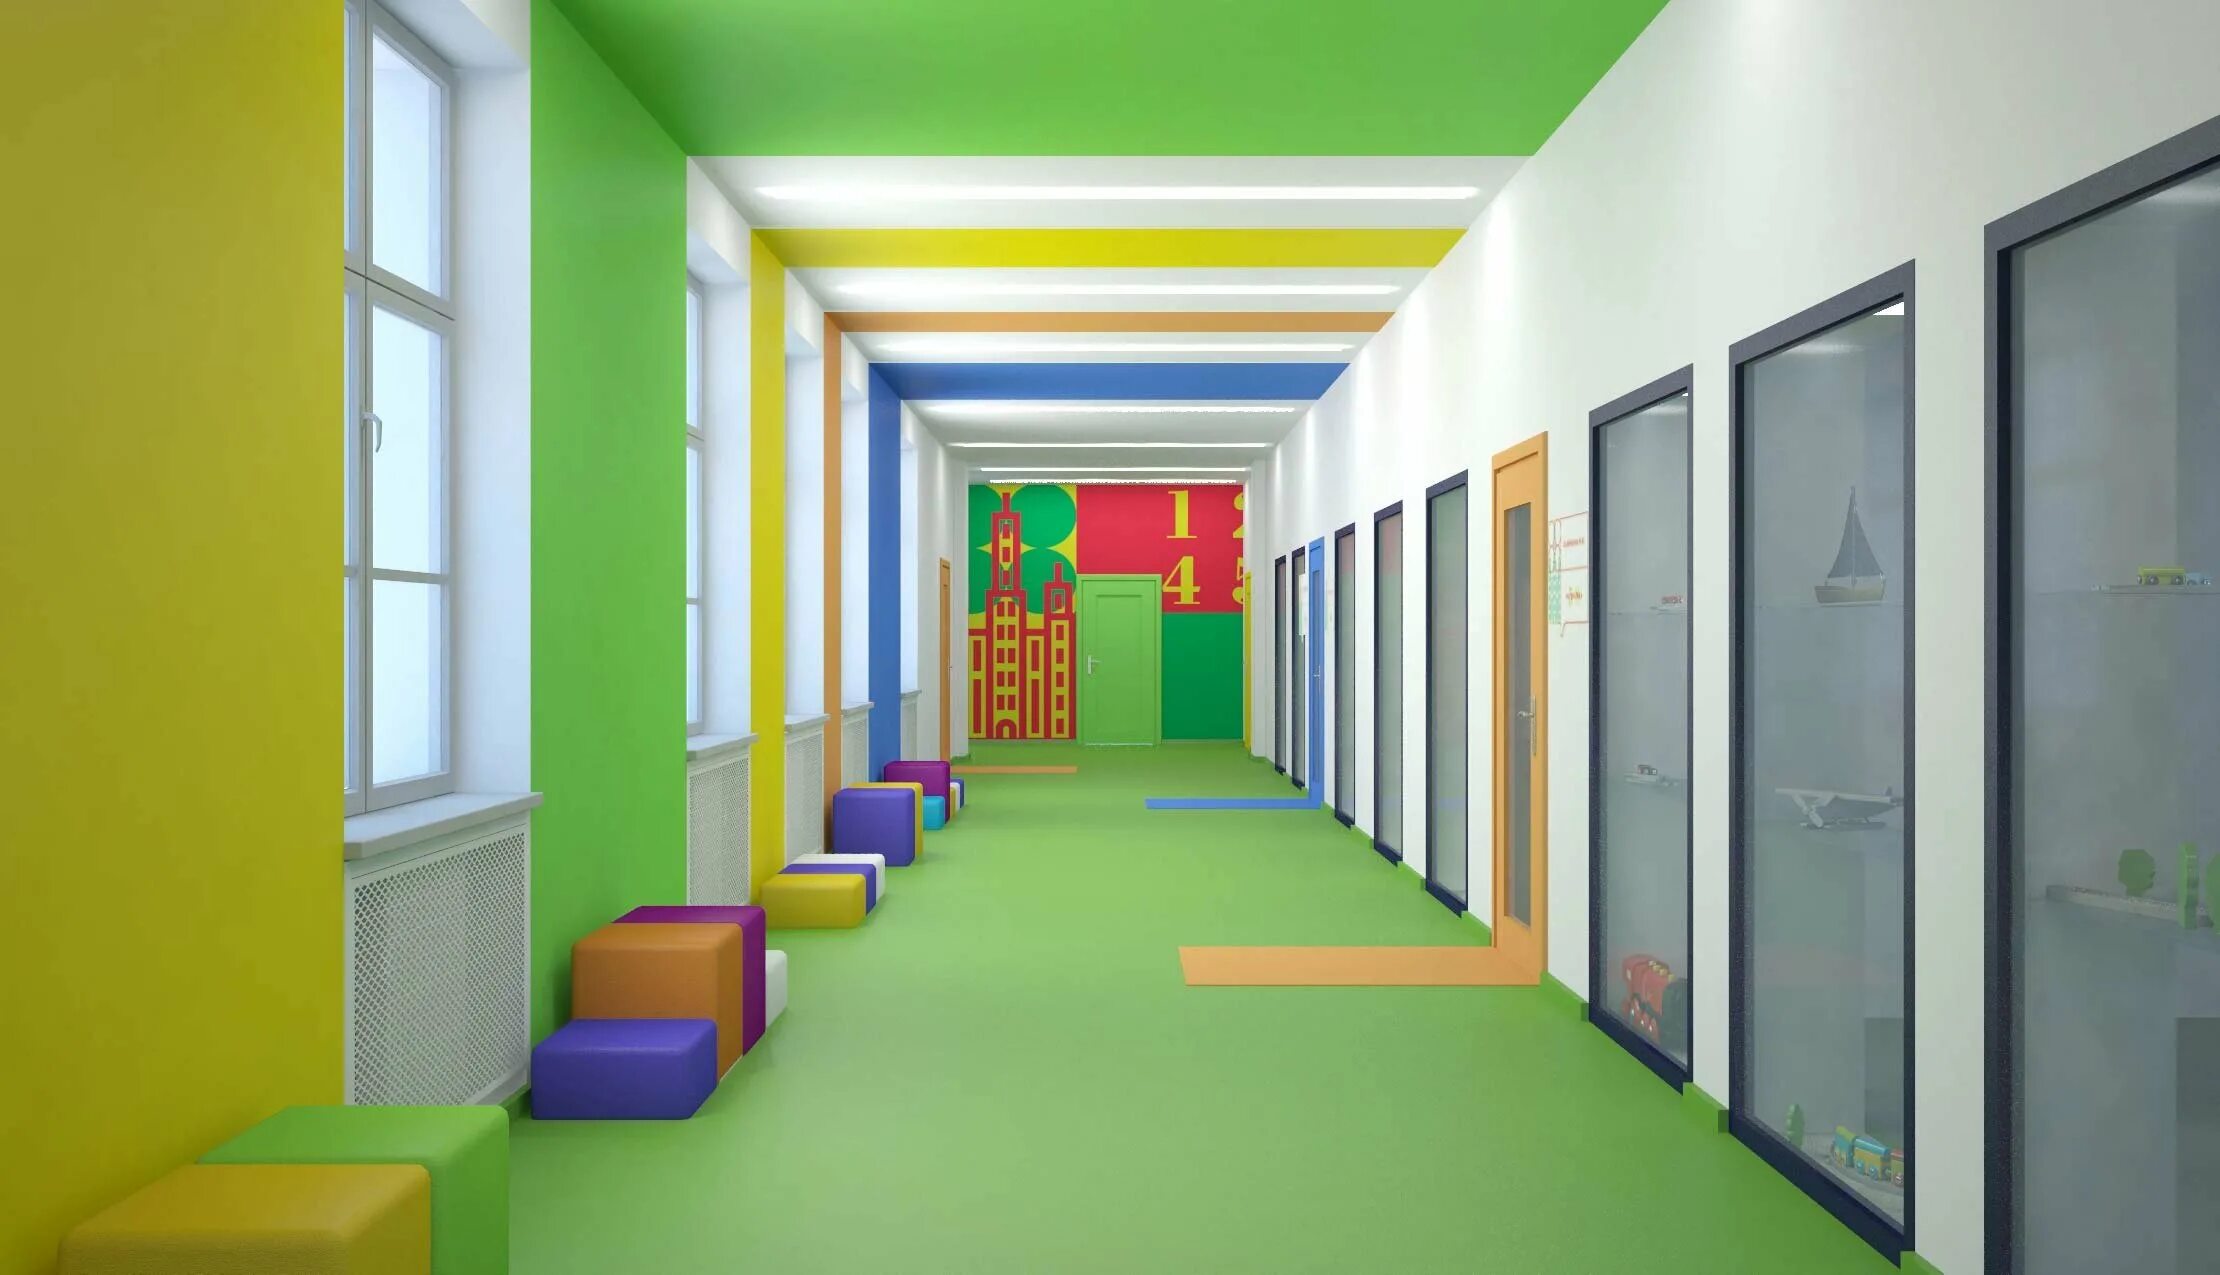 Дол холл. Интерьер коридора в детском саду. Интерьер школьного коридора. Интерьер коридора в школе. Разноцветные стены.